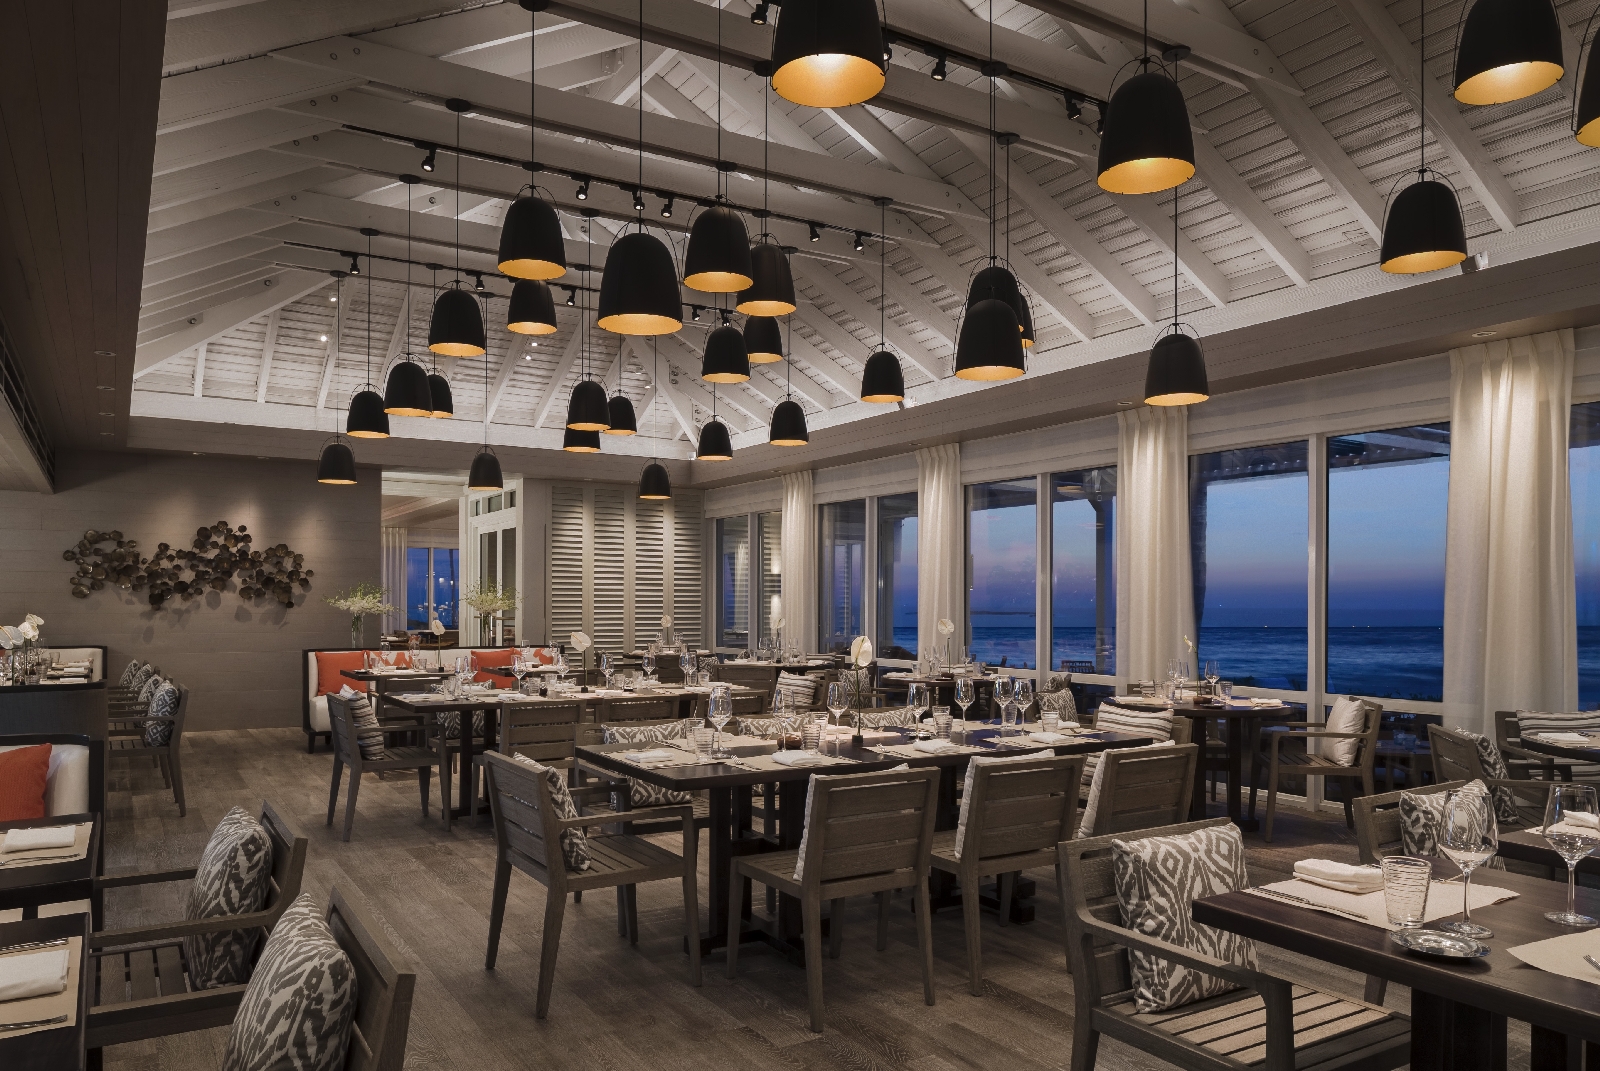 Restaurant interiors of Four Seasons Ocean Club, Bahamas